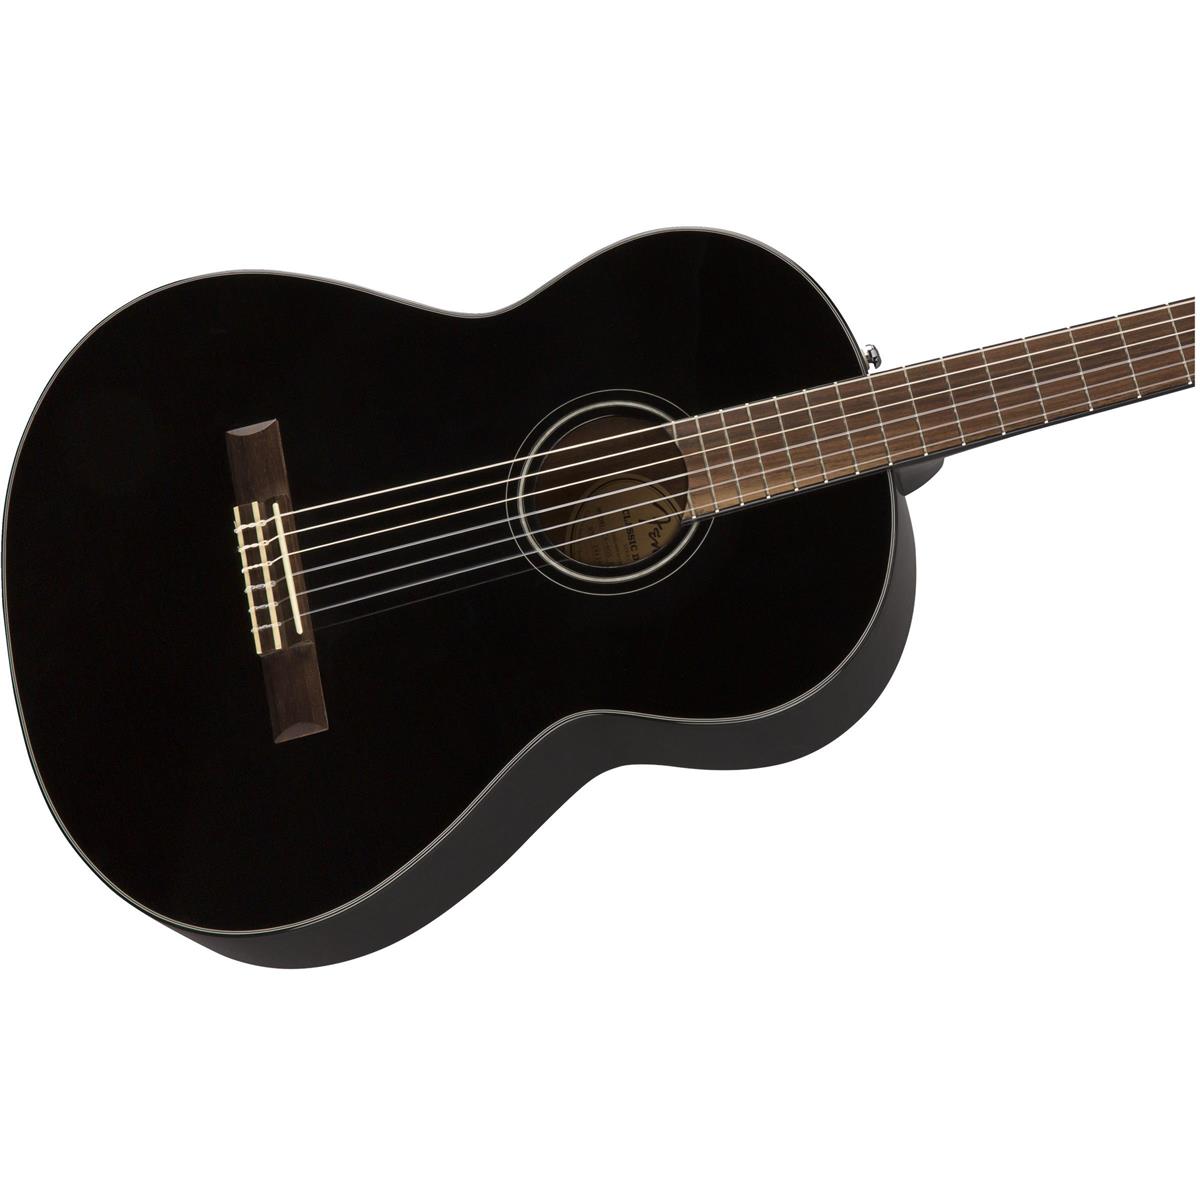 Fender Classic Design CN-60S Concert Nylon 6-String Acoustic Guitar (Black) - Acoustic Guitar 木結他